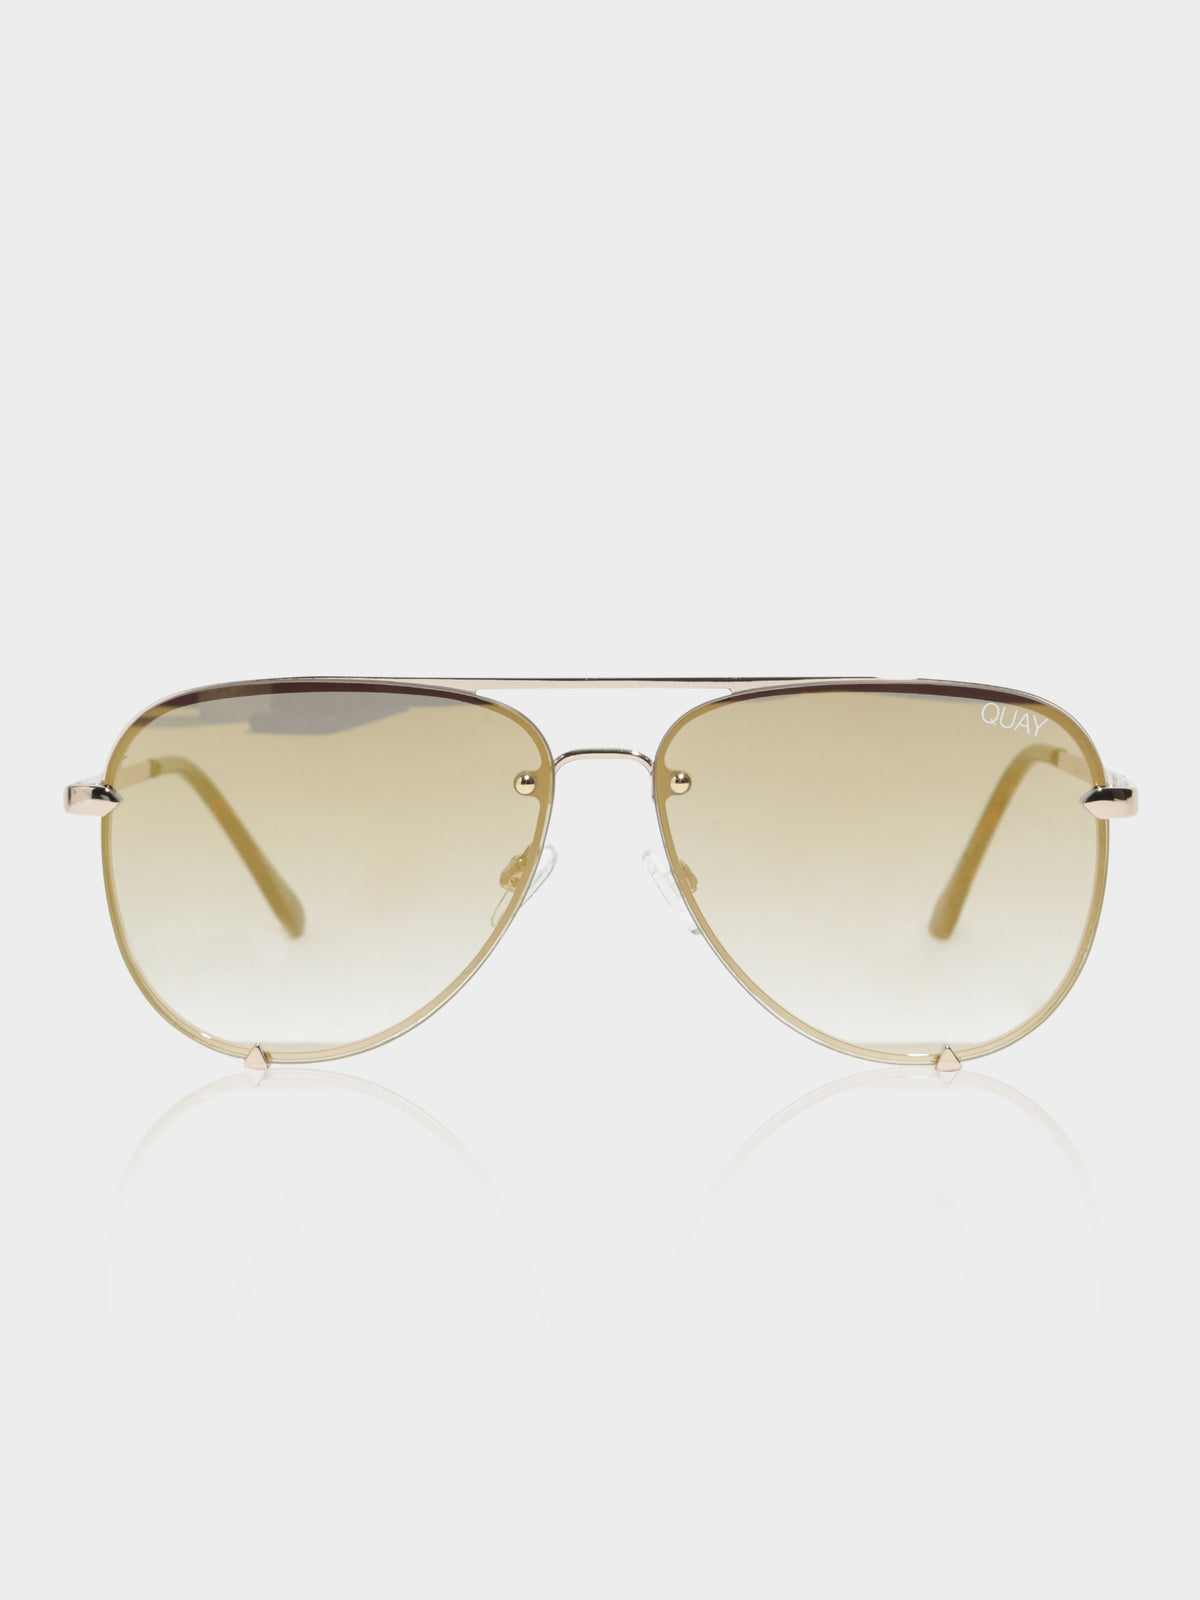 Mini High Key  Brown Lenses Sunglasses in Gold